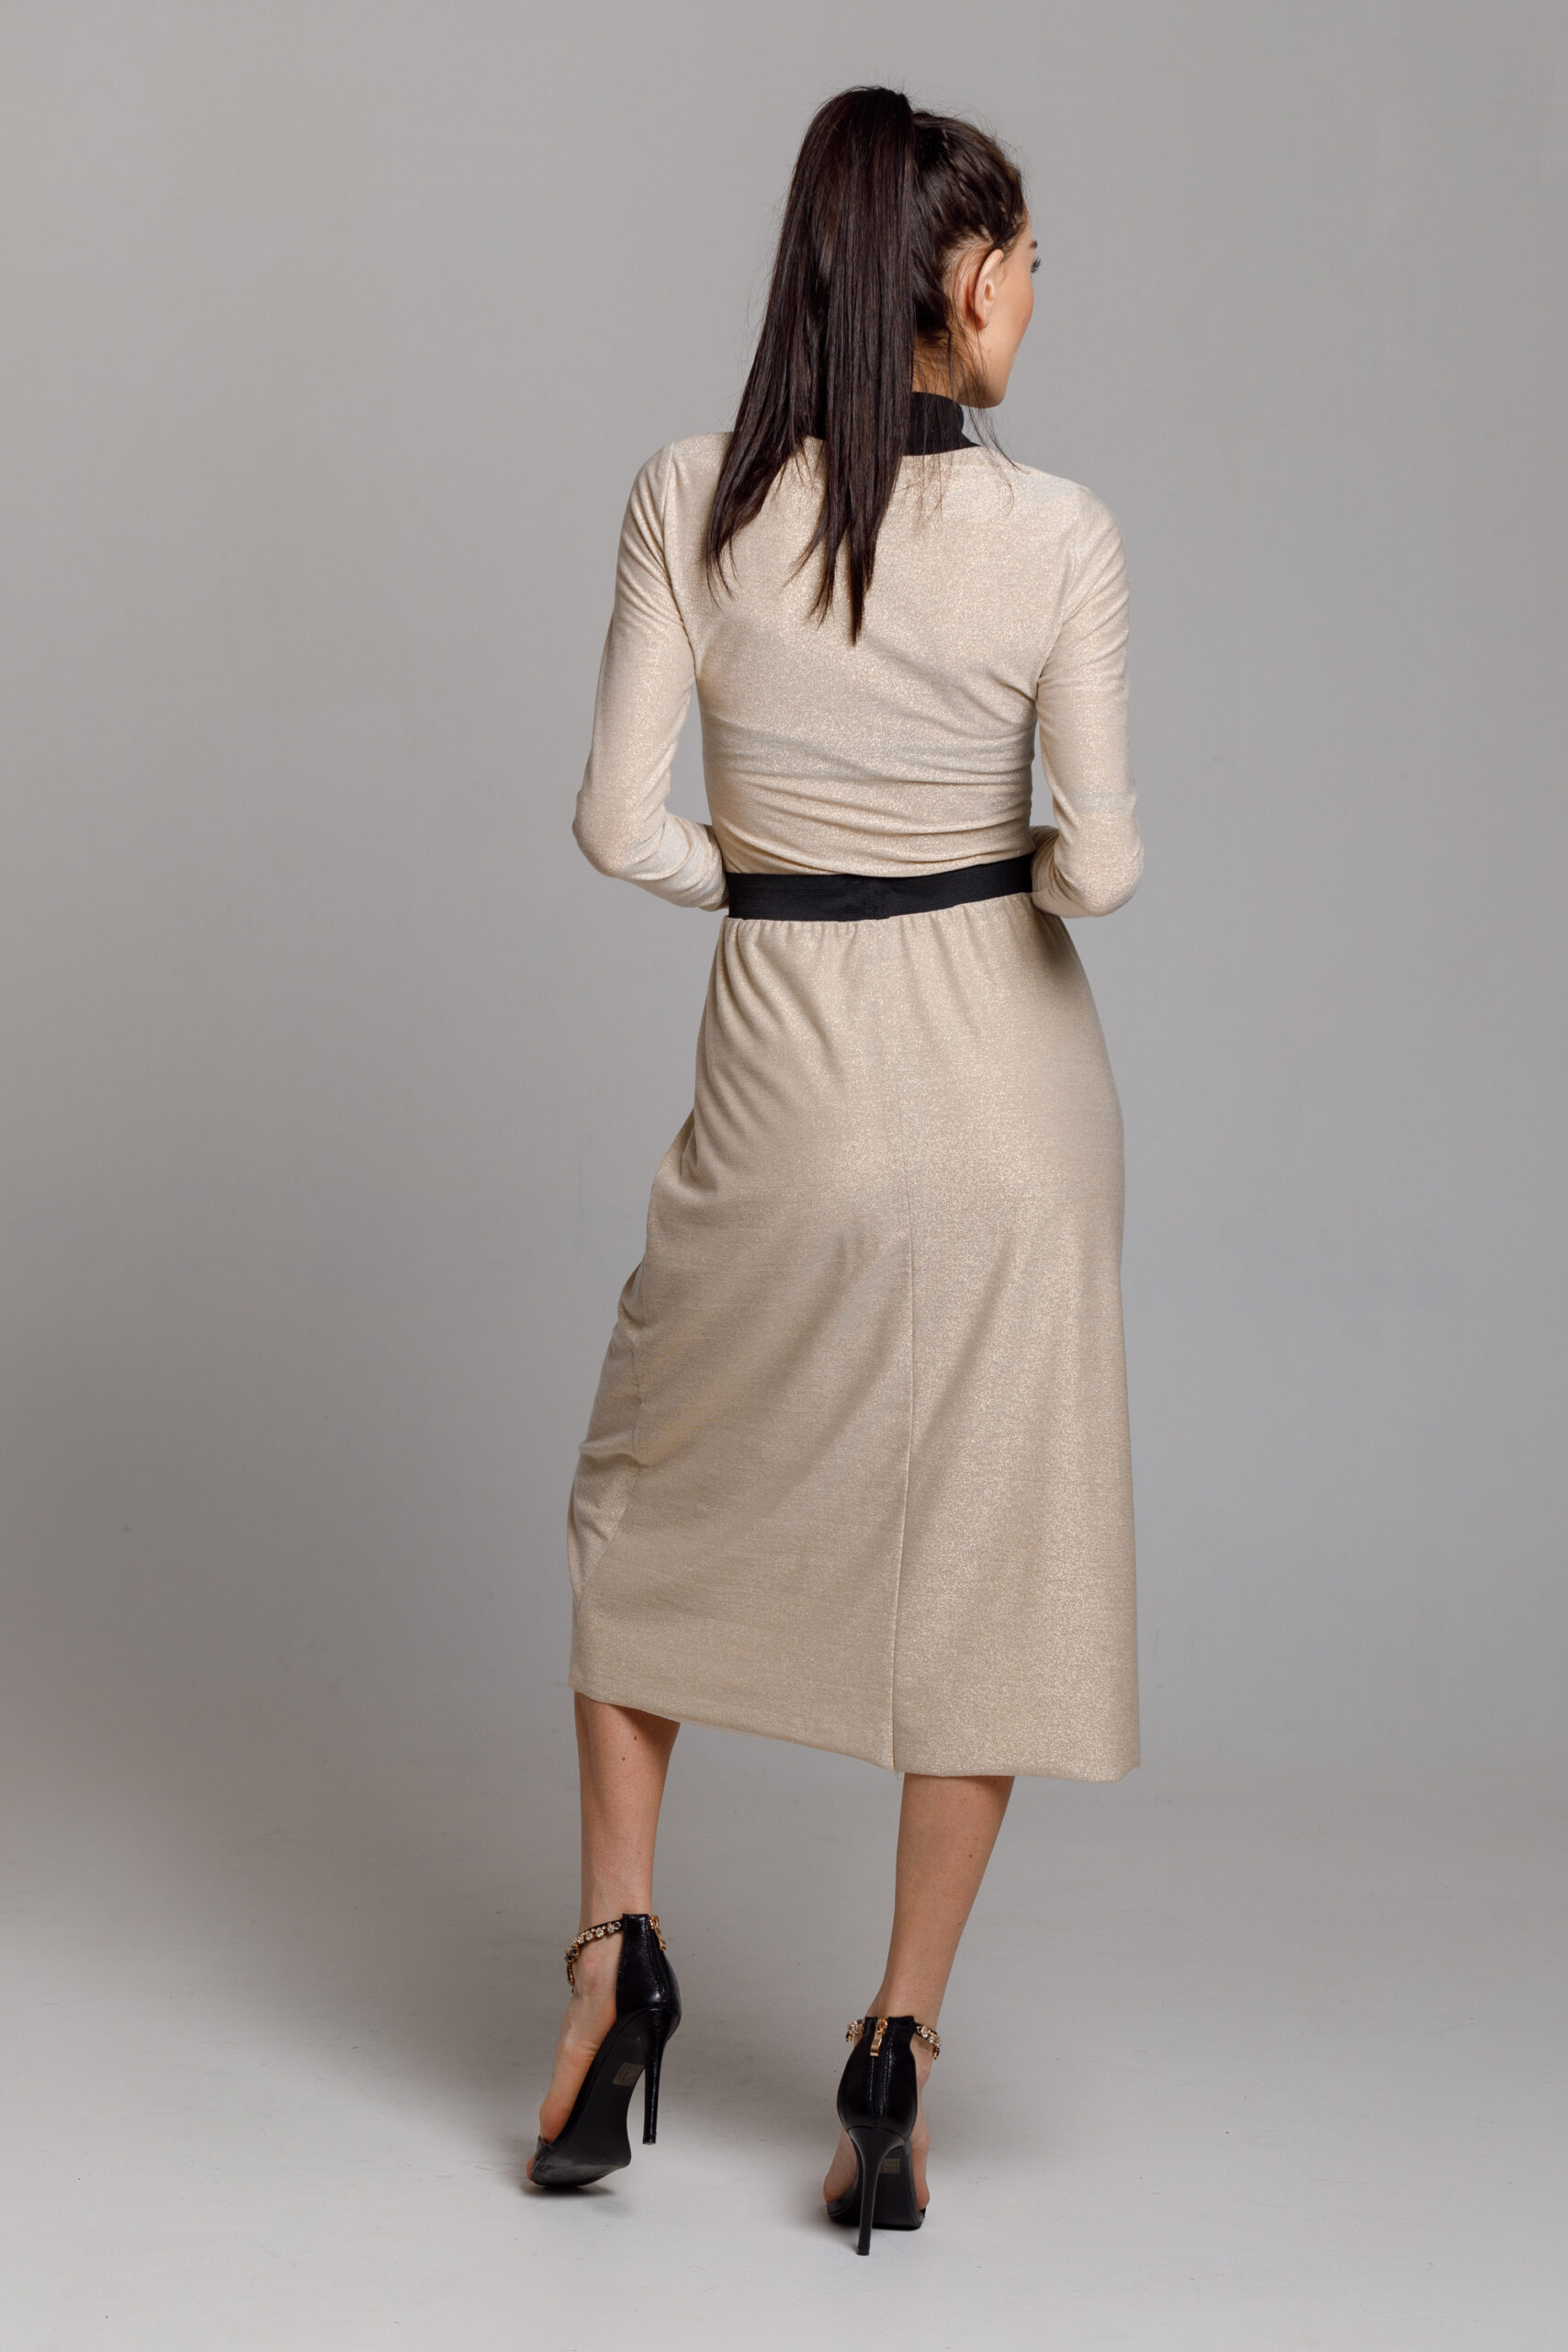 PROSE MIDI lurex skirt. Natural fabrics, original design, handmade embroidery